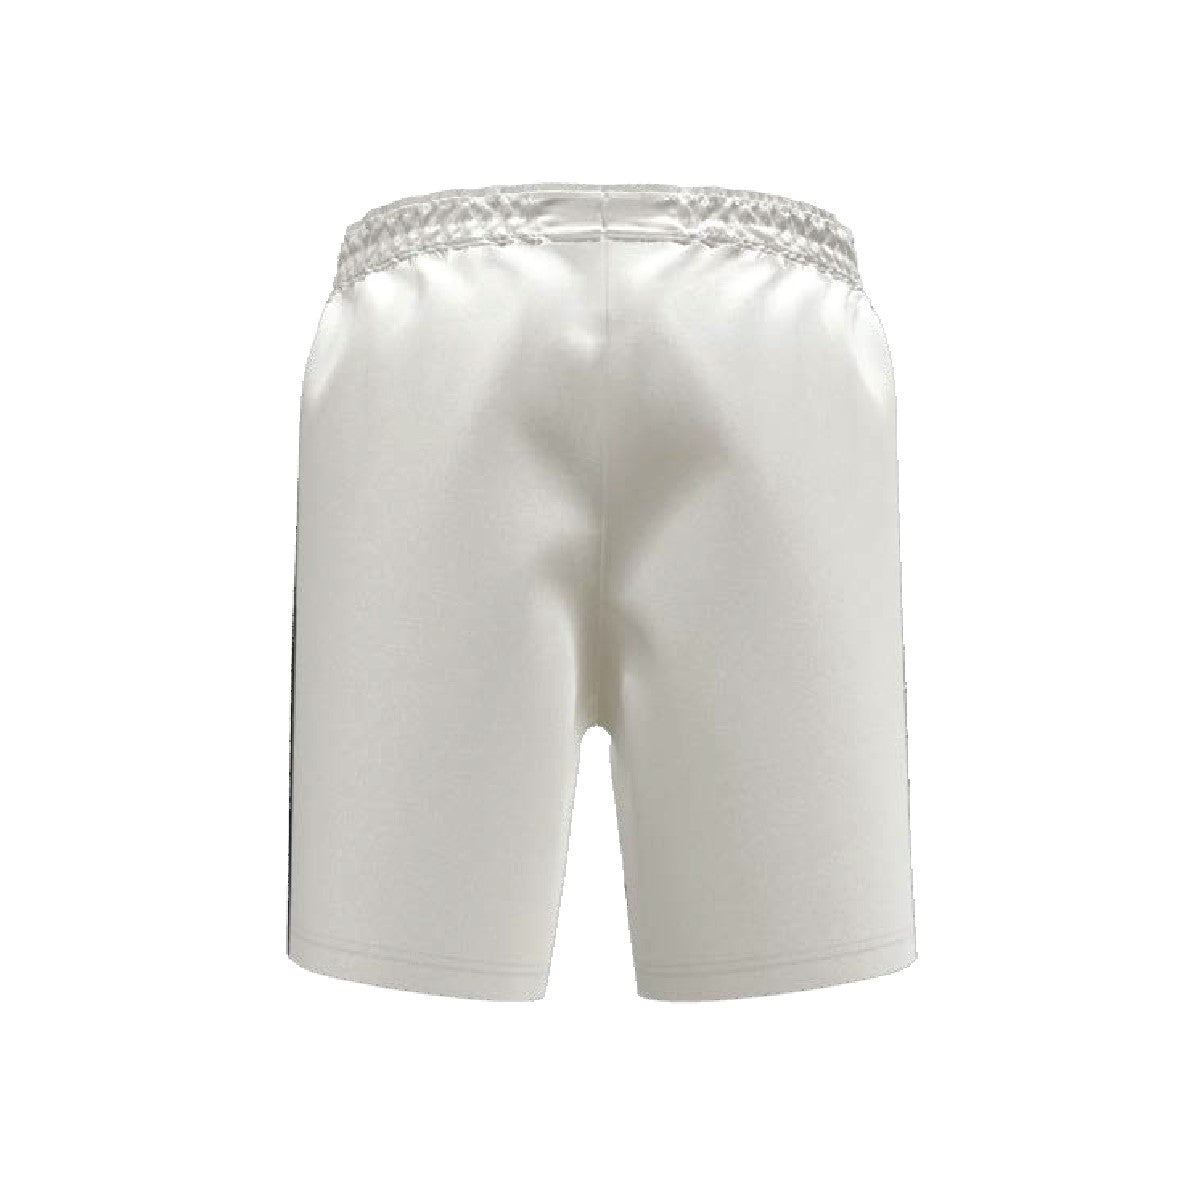 Paladin Men's Tennis Baseline Shorts White